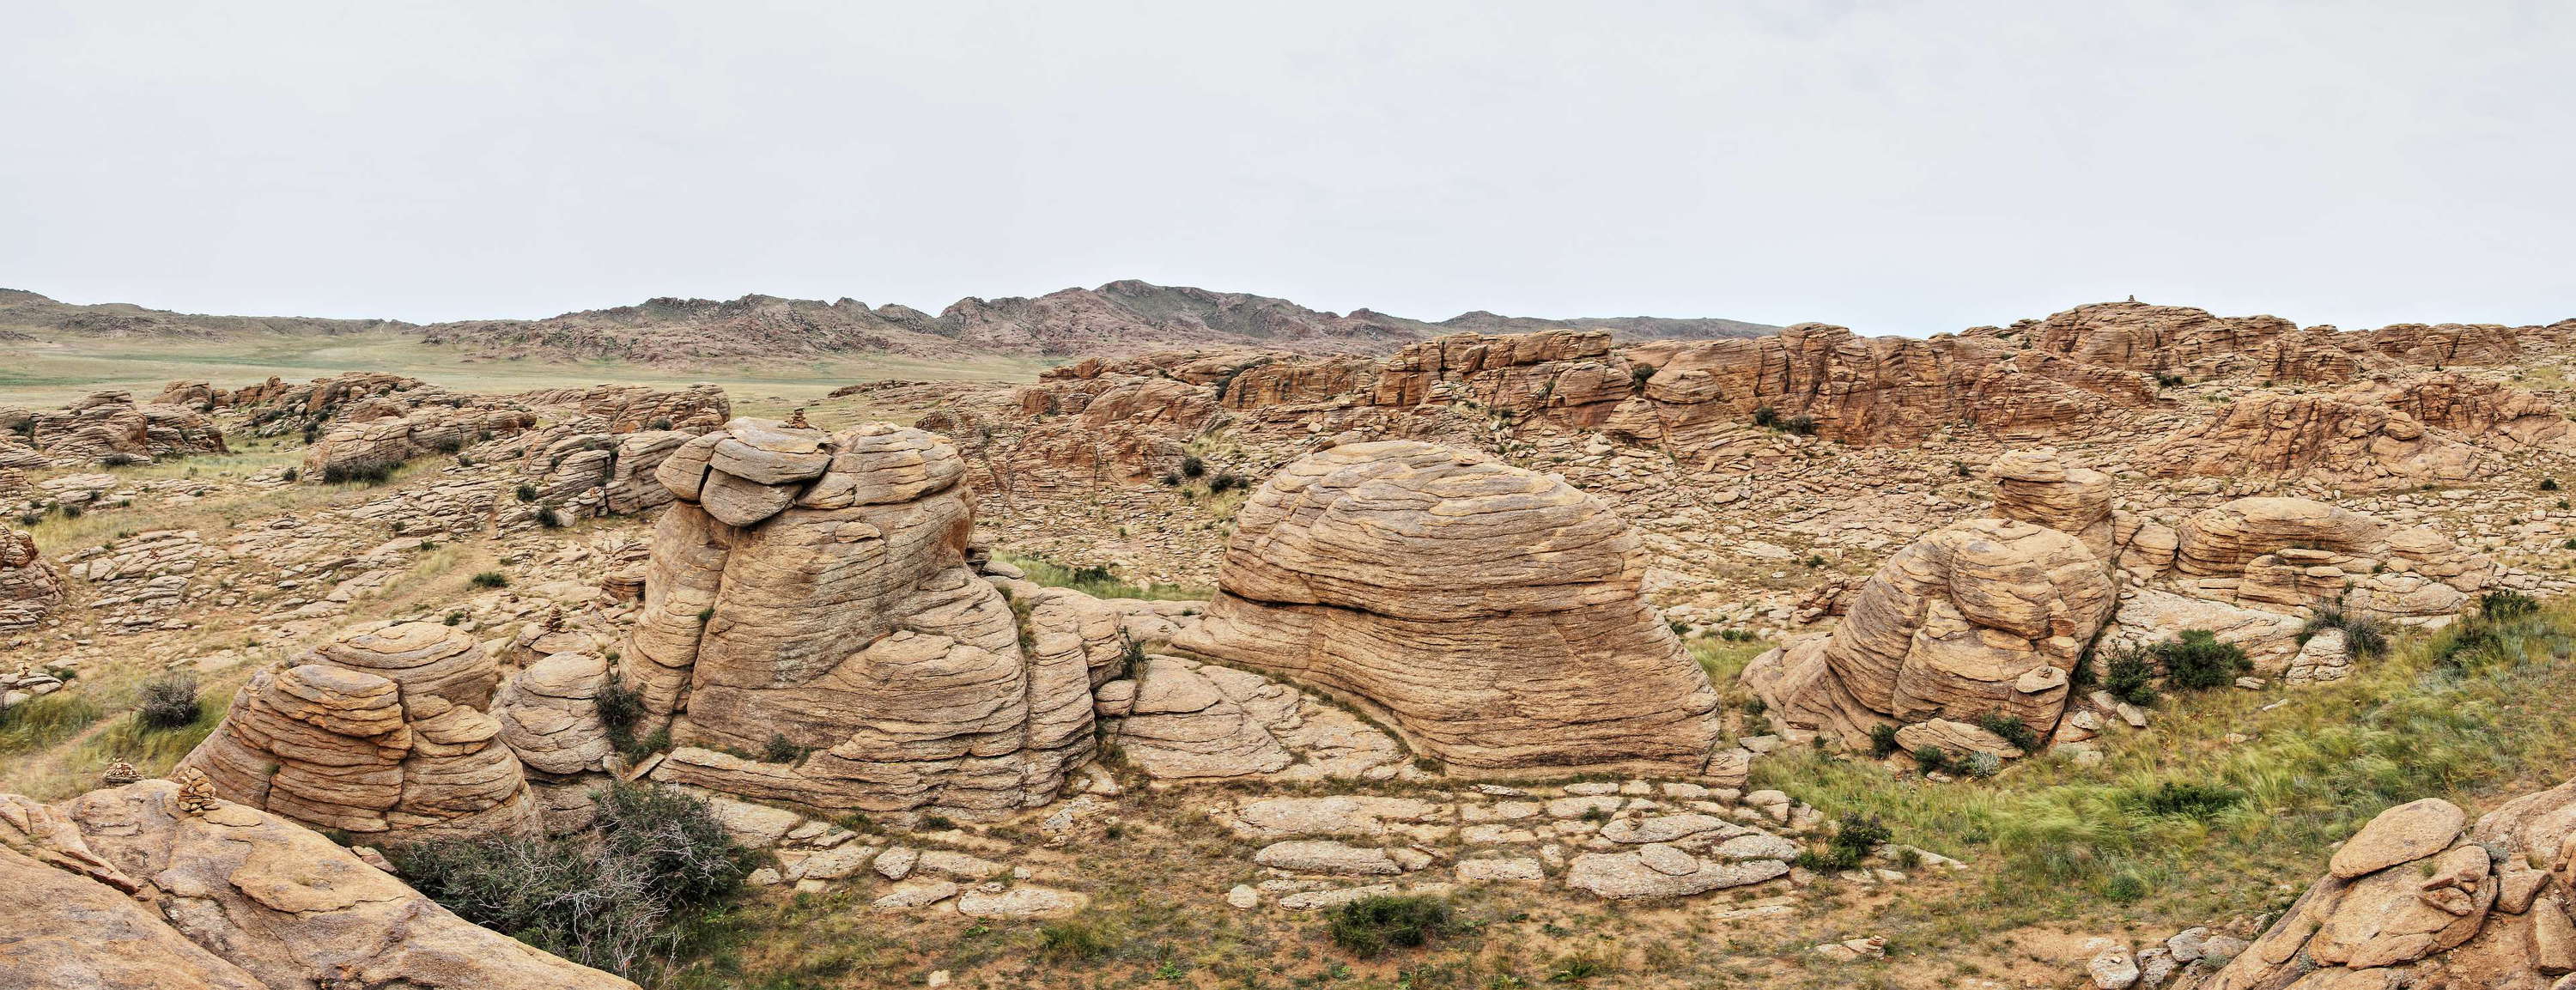 Baga Gazarin Chuluu  |  Granite formation